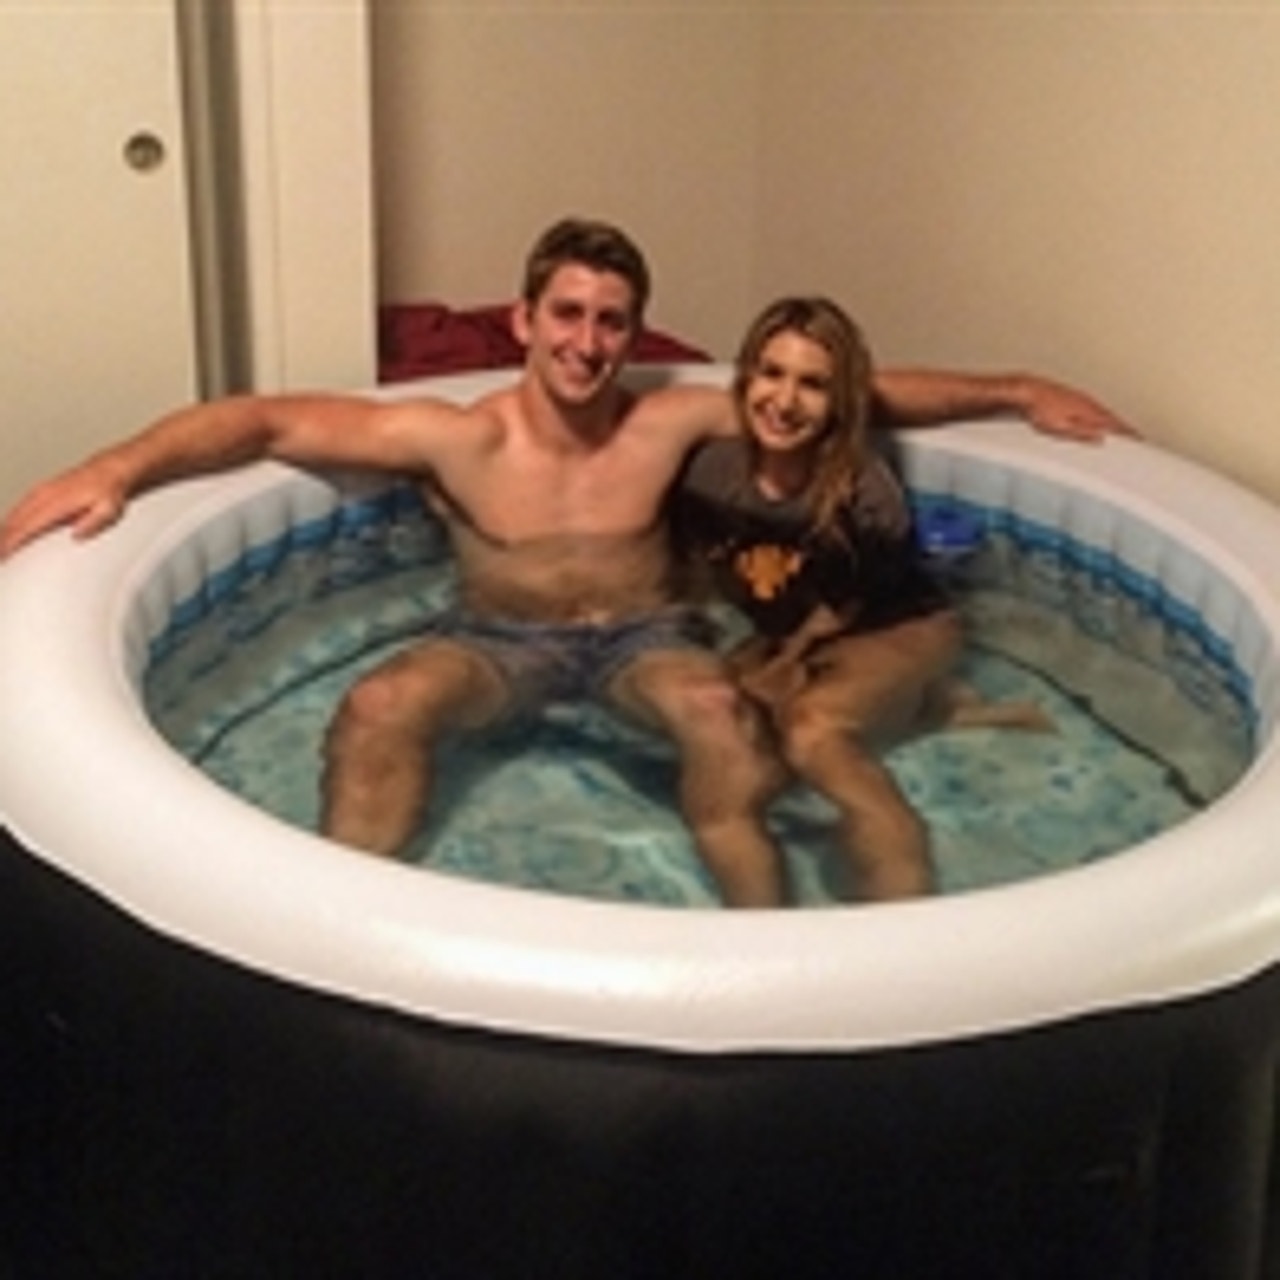 UCLA freshman QB living the dream in a hot tub